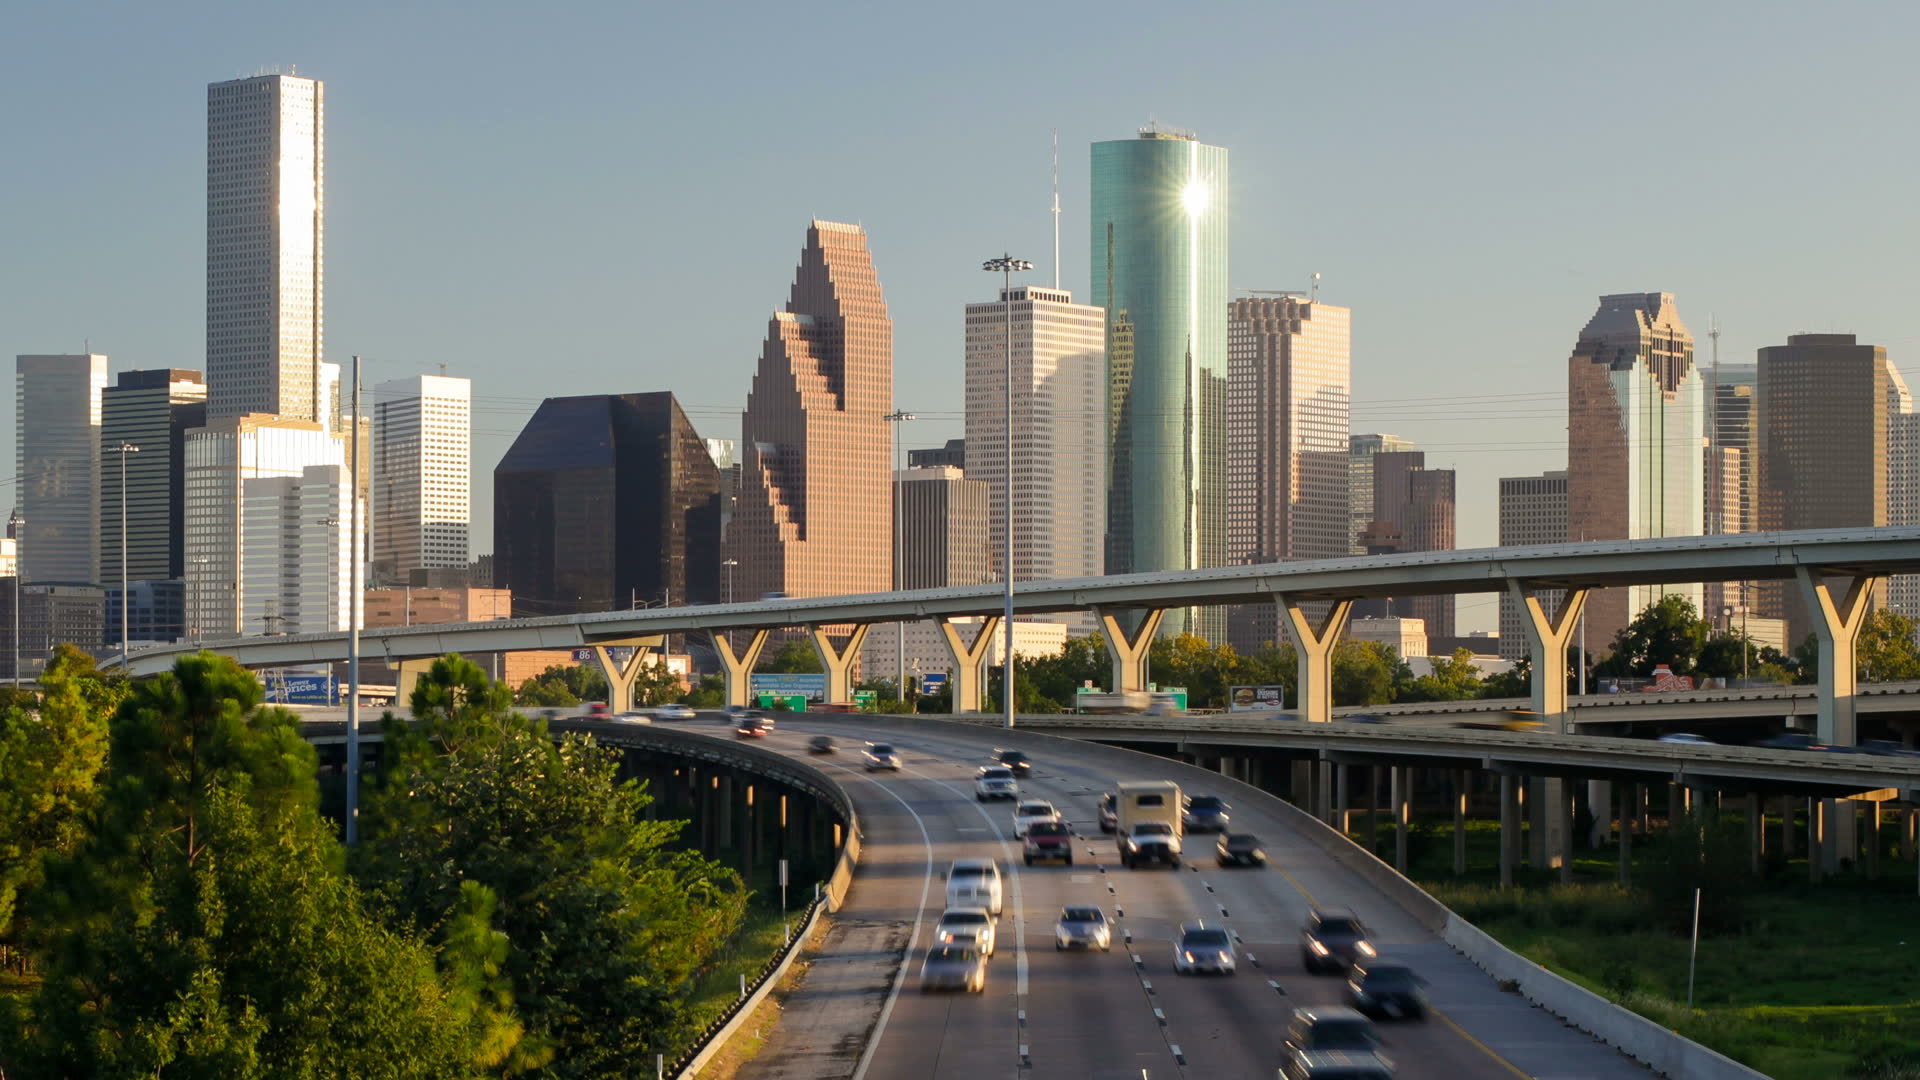 1920x1080 Houston Texas USA highways and downtown city skyline Stock